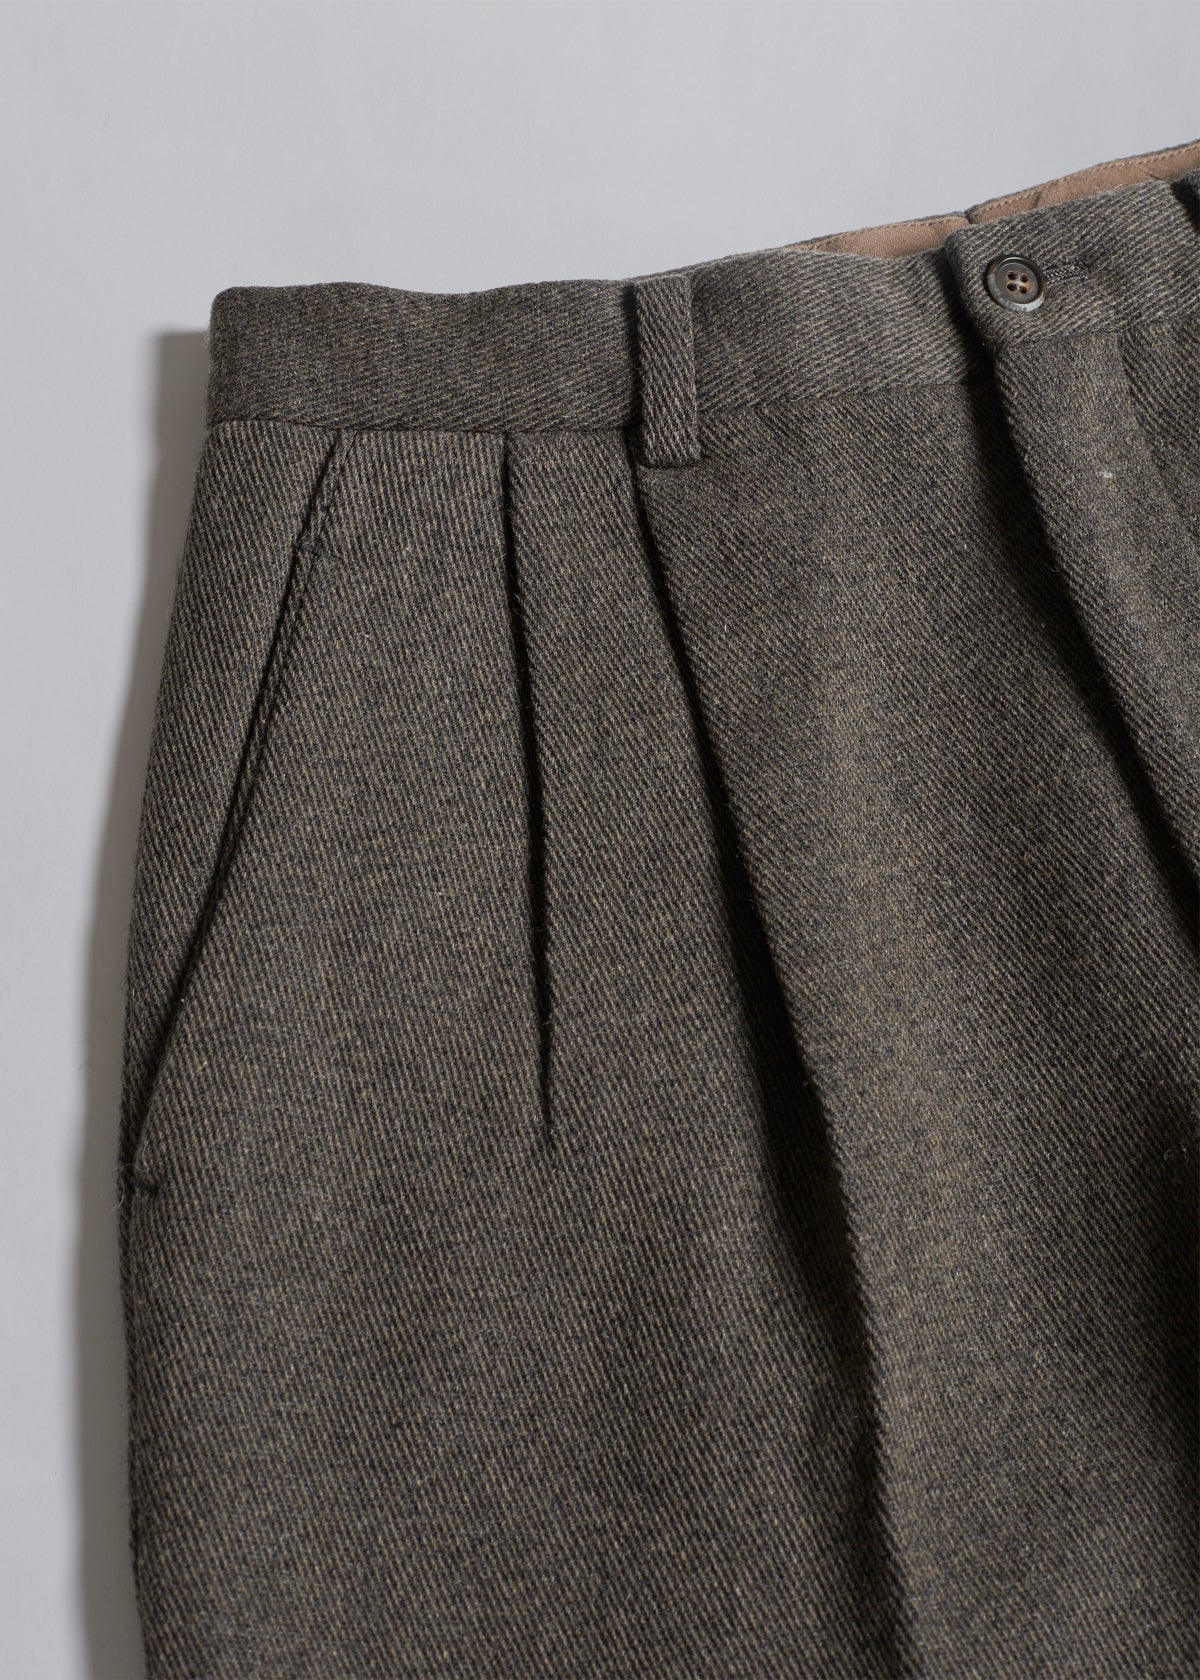 Heavy Wool Pleated High Waist Pants 1980's - Medium - The Archivist Store